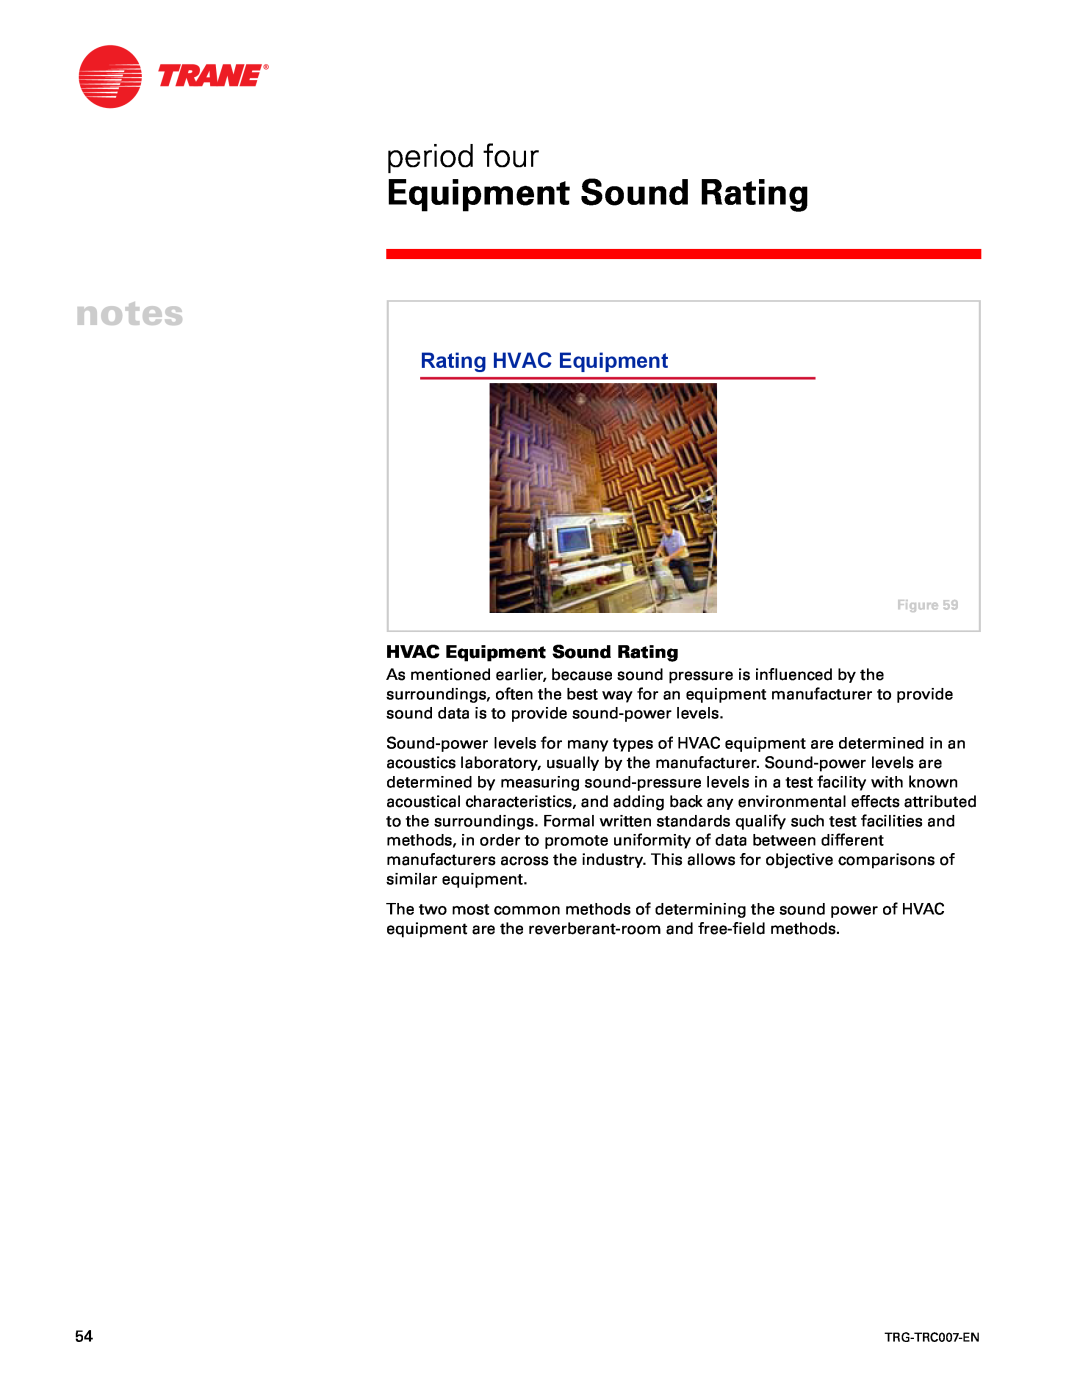 Trane TRG-TRC007-EN manual Rating HVAC Equipment, period four, HVAC Equipment Sound Rating 